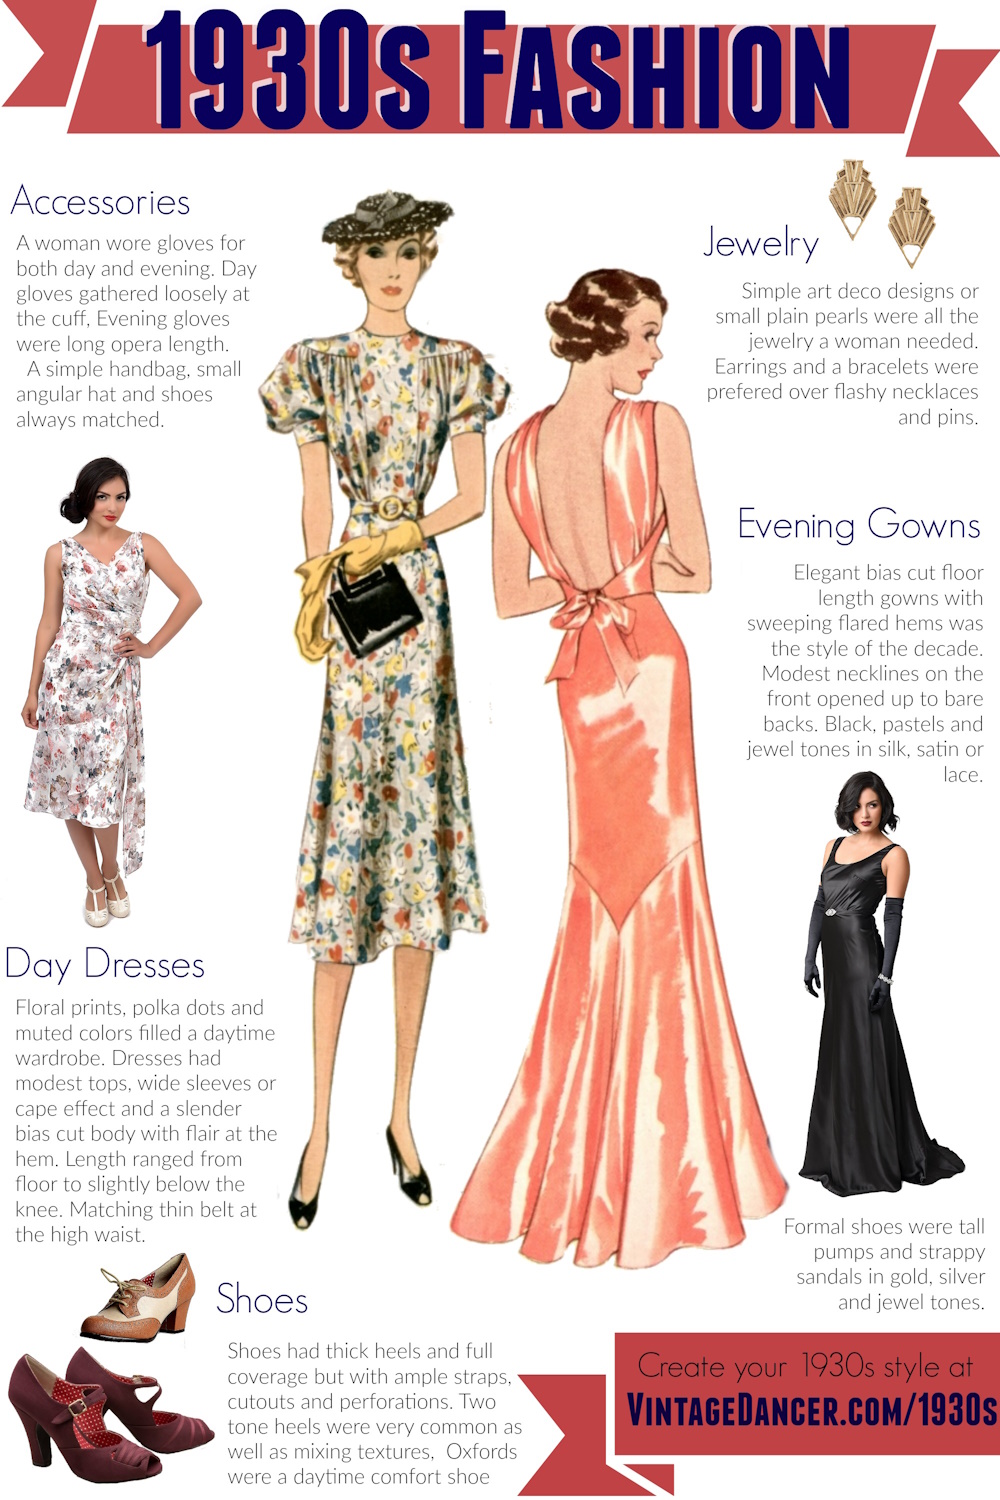 1920s Fashion Guide: What to Wear to Vizcaya's Seersucker Social - Vizcaya